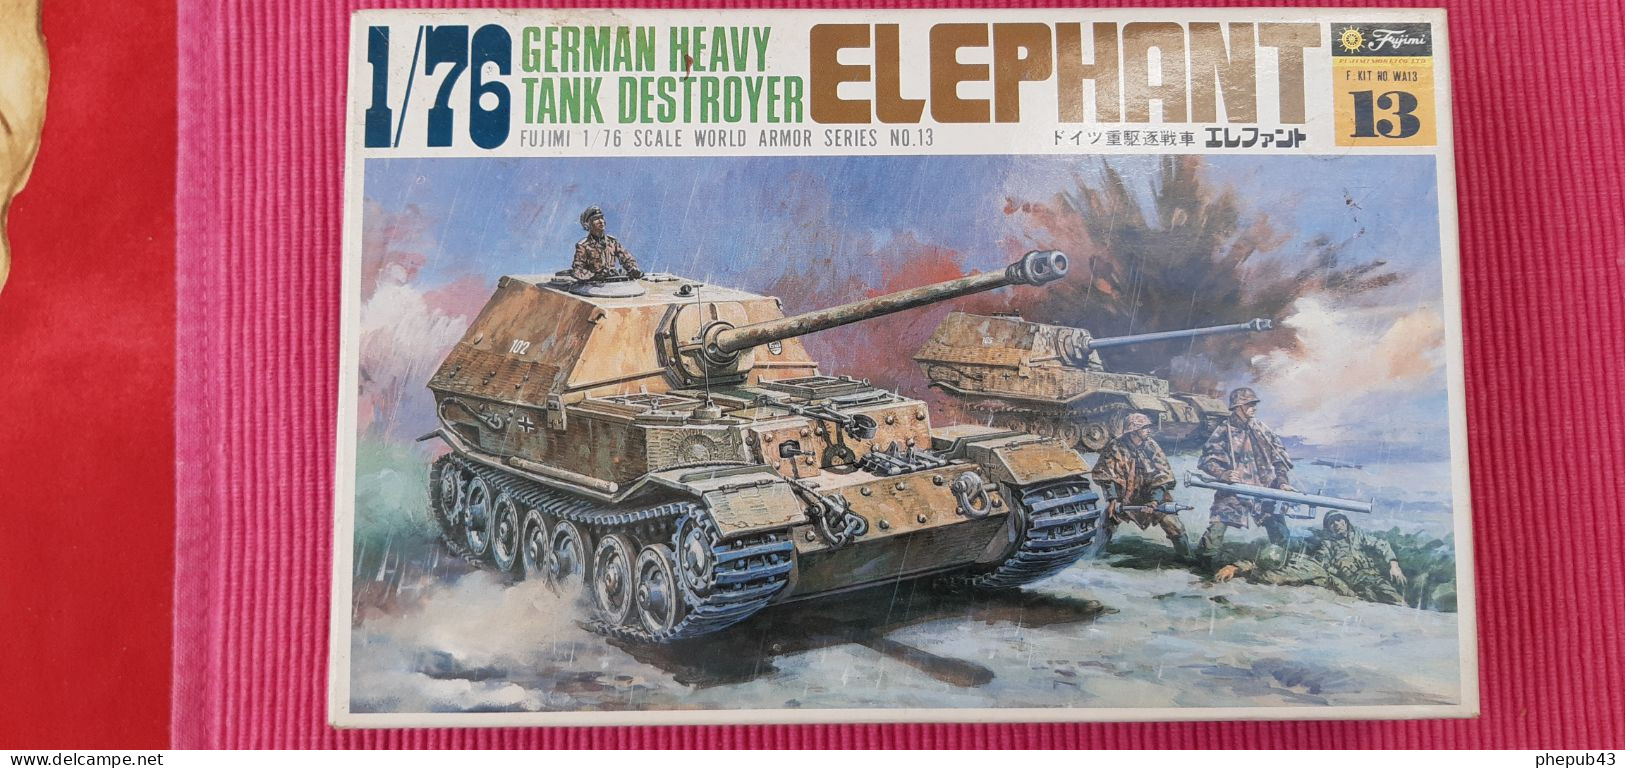 Elephant Heavy Tank Destroyer - Germany - Model Kit - World Armor Series - Fujimi (1:76) - Veicoli Militari